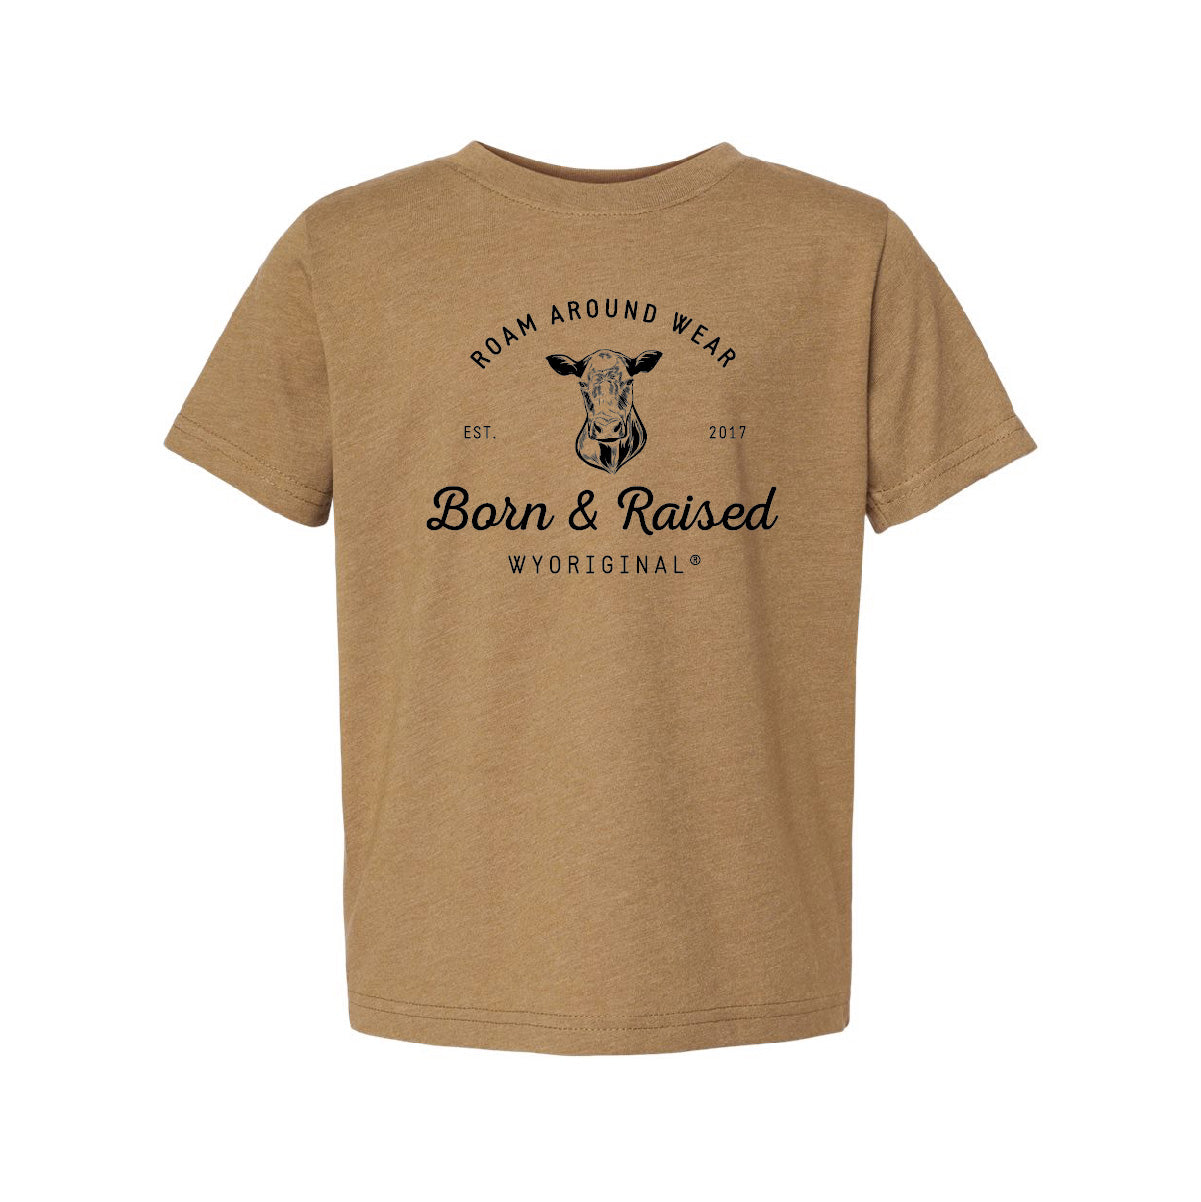 Toddler Wyoriginal Tee. Cow t-shirt. Ranch Shirt. Wyoming shirt. Roam Around Wear is a Wyoming t-shirt company based in Gillette, Wyomin